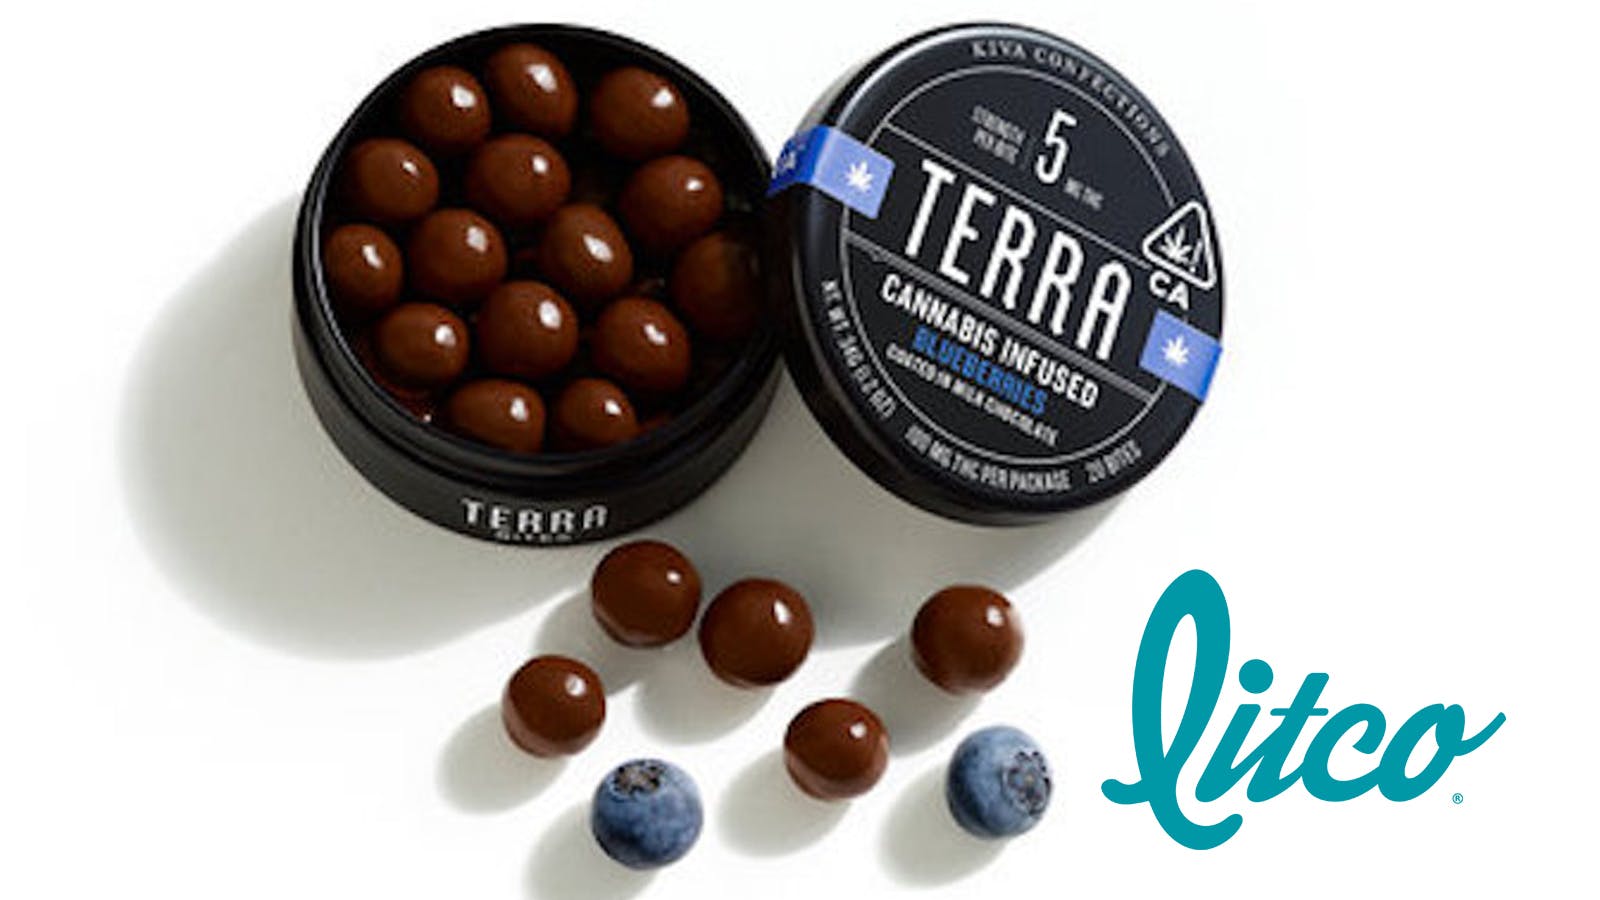 Kiva: Terra Blueberry Bites 100mg